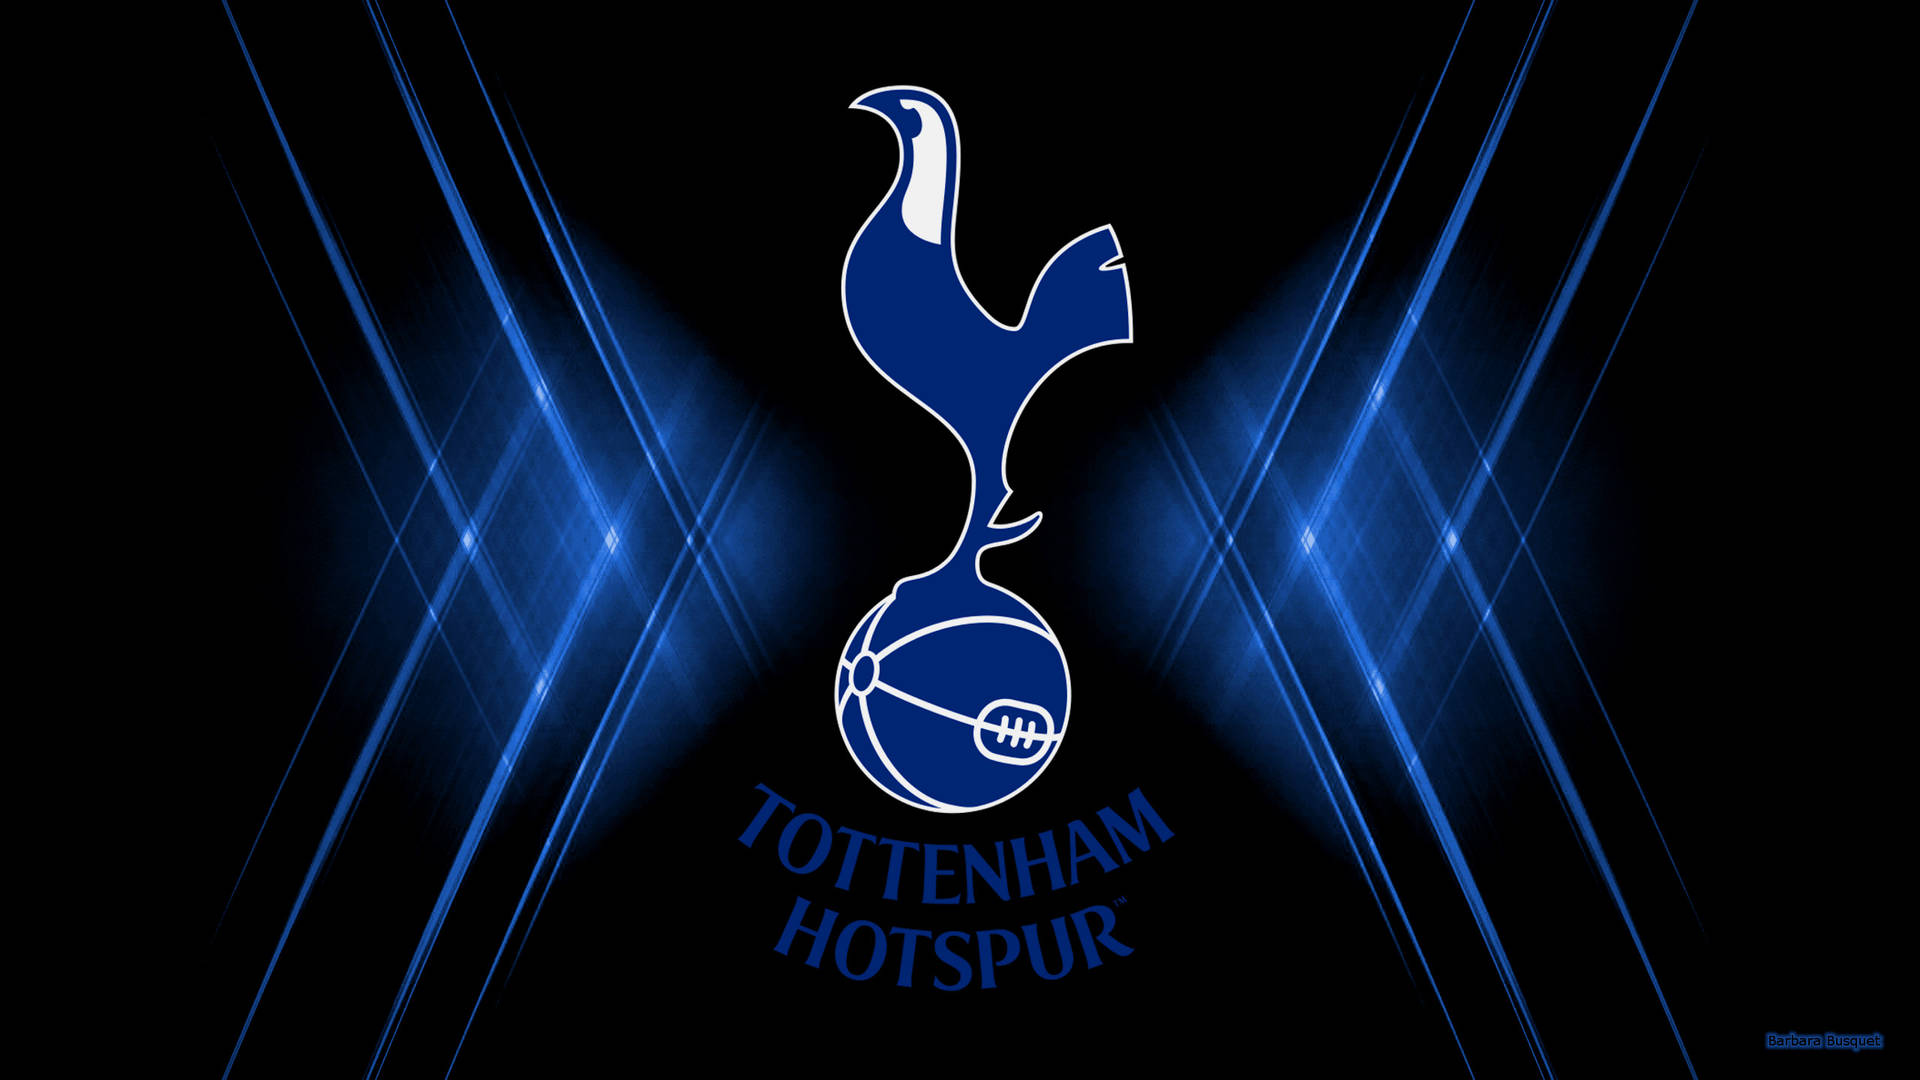 Schwarzesund Blaues Tottenham Hotspurs Fc Desktop. Wallpaper